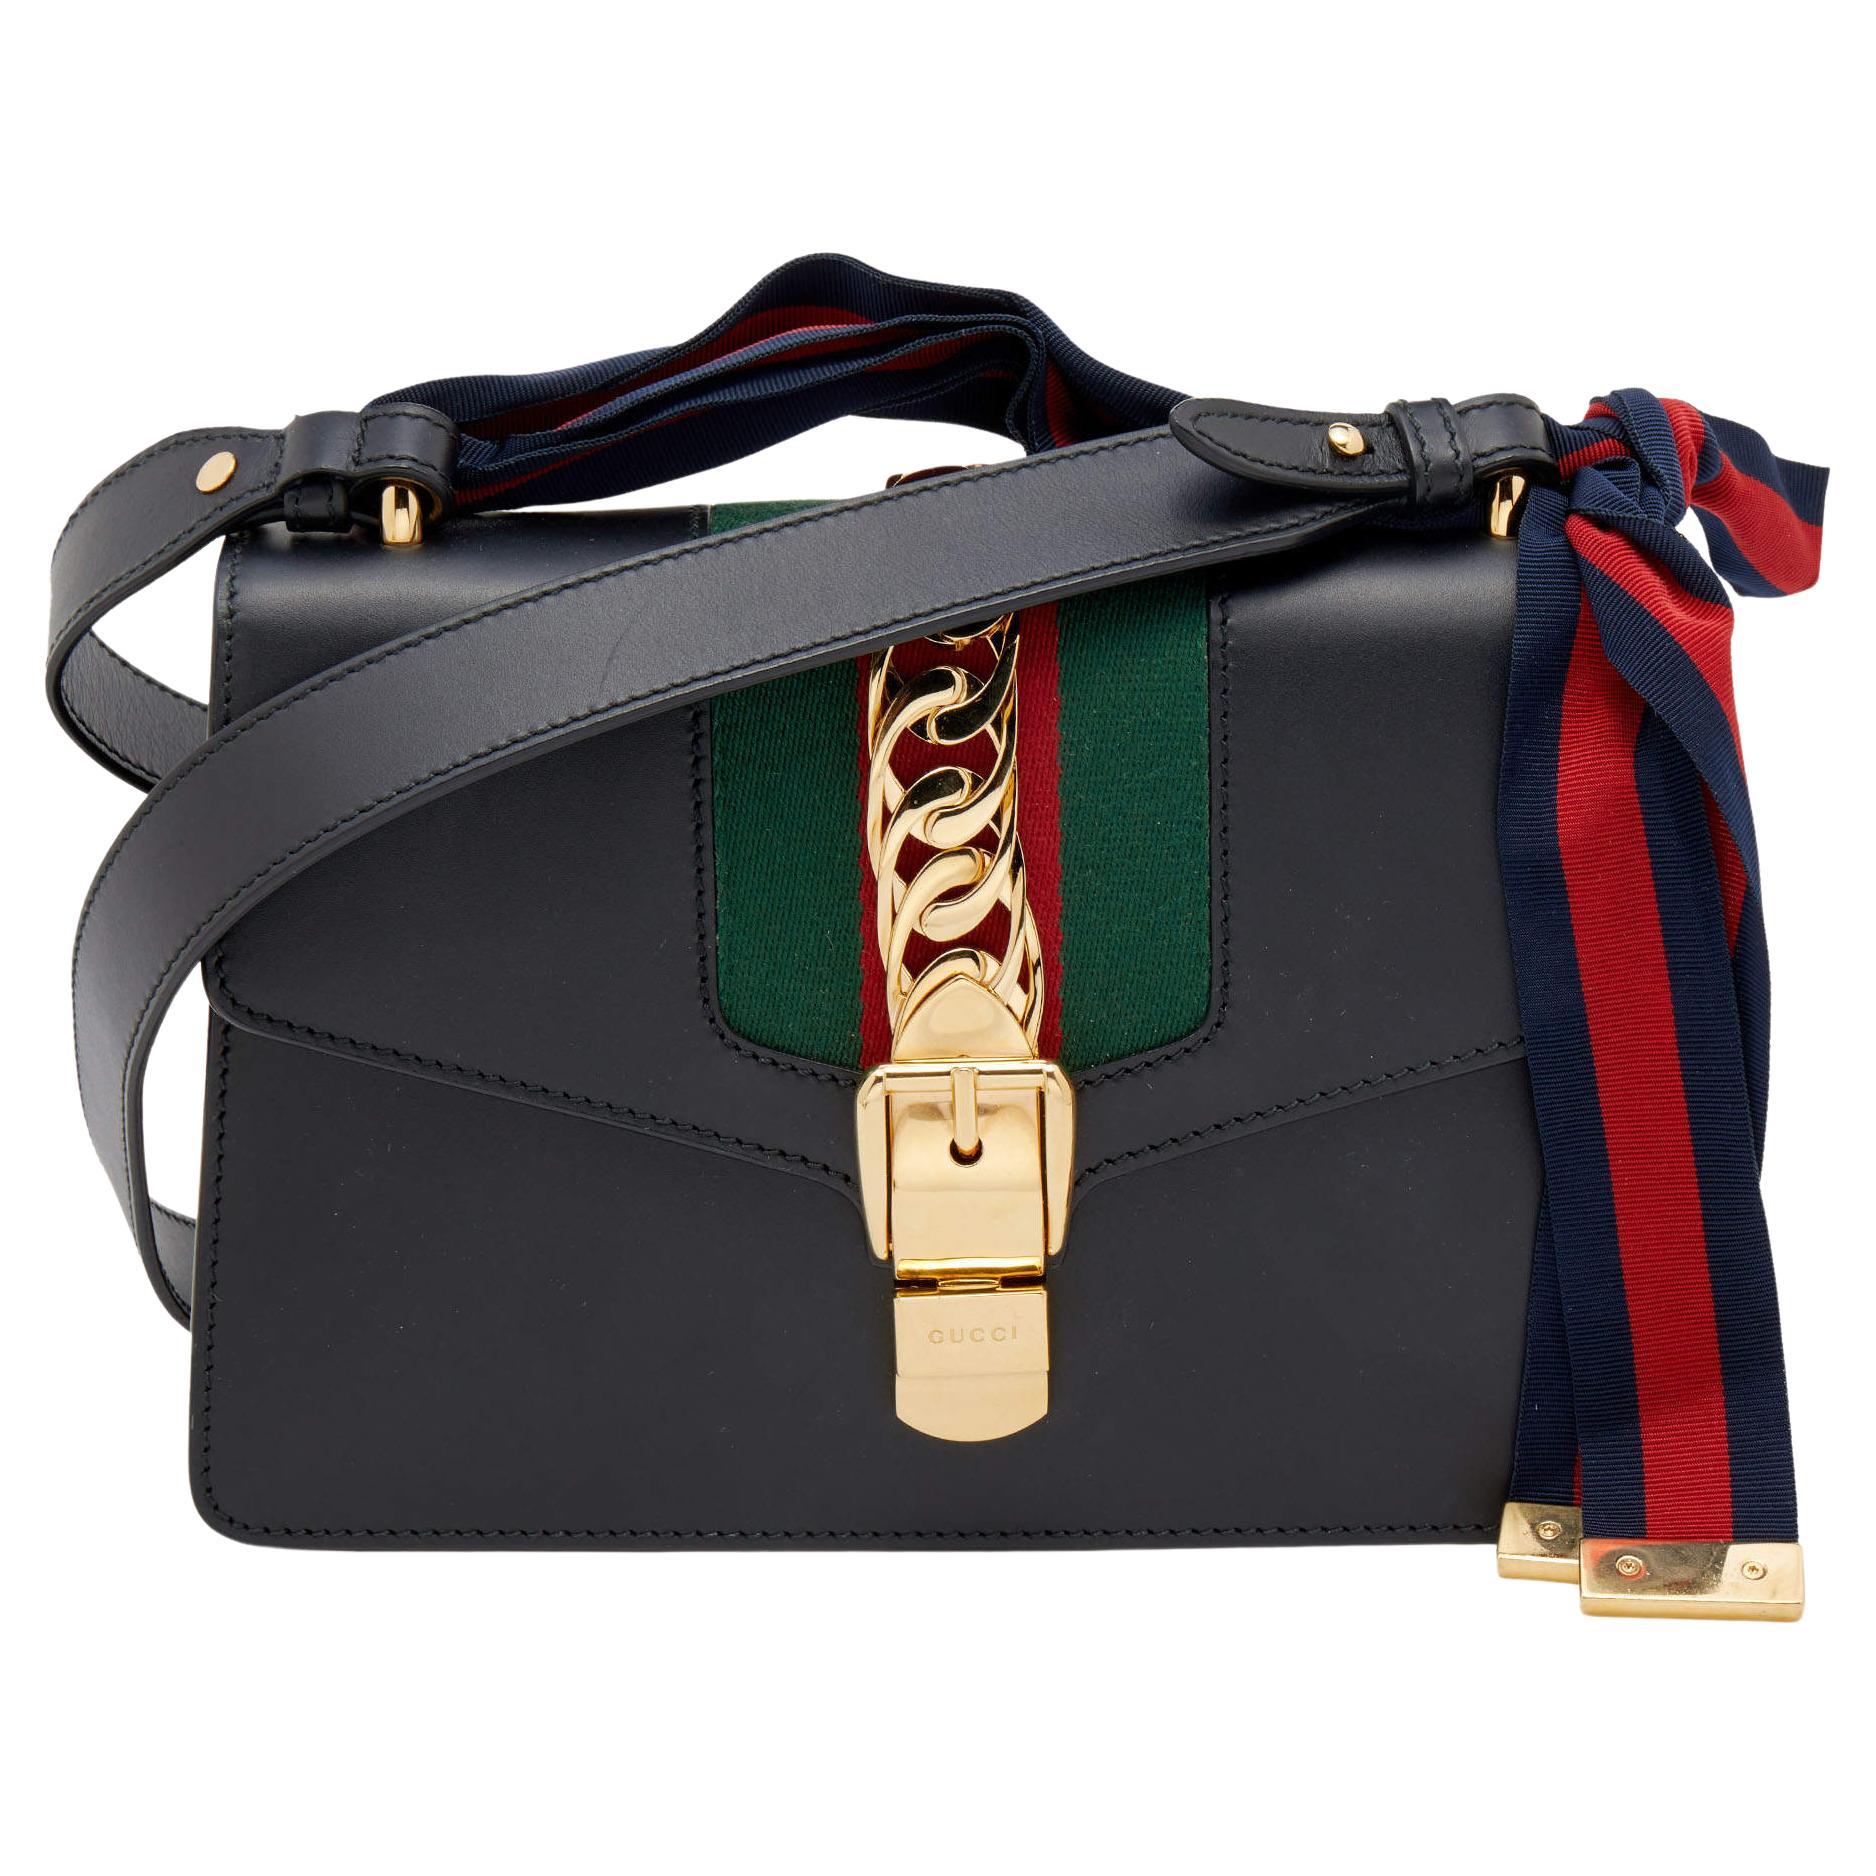 Gucci Black Leather Medium Sylvie Shoulder Bag